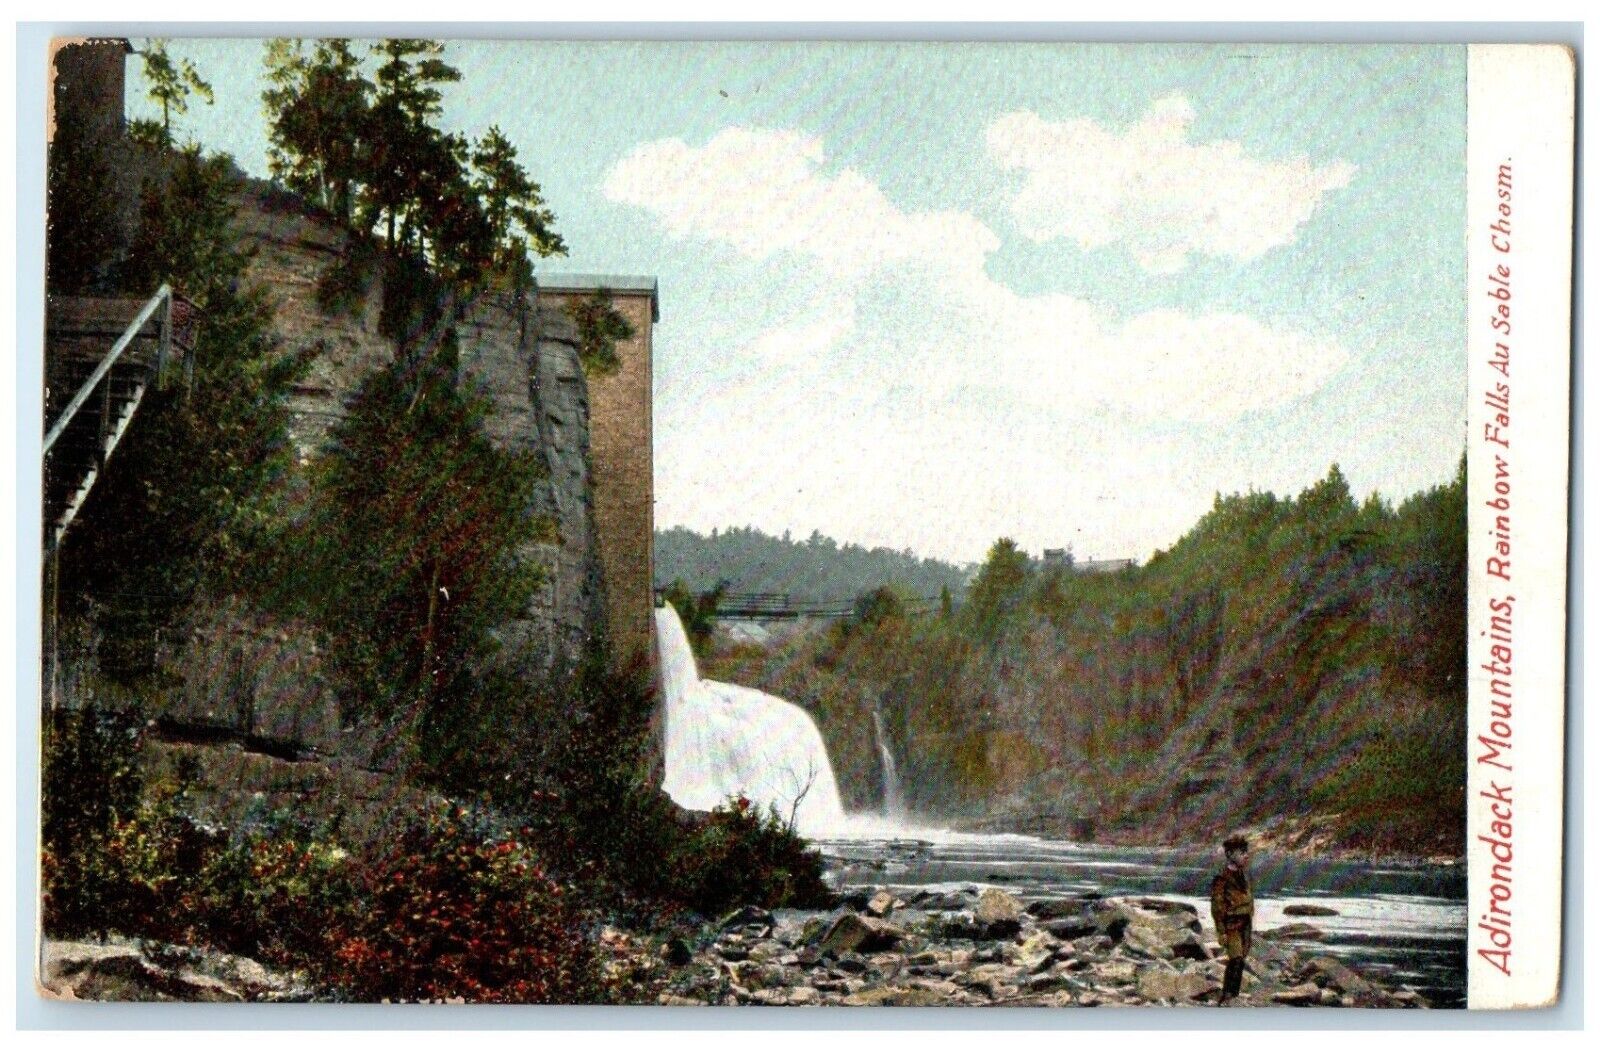 1905 Rainbow Falls Au Sable Chasm Adirondack Mountains New York Vintage Postcard